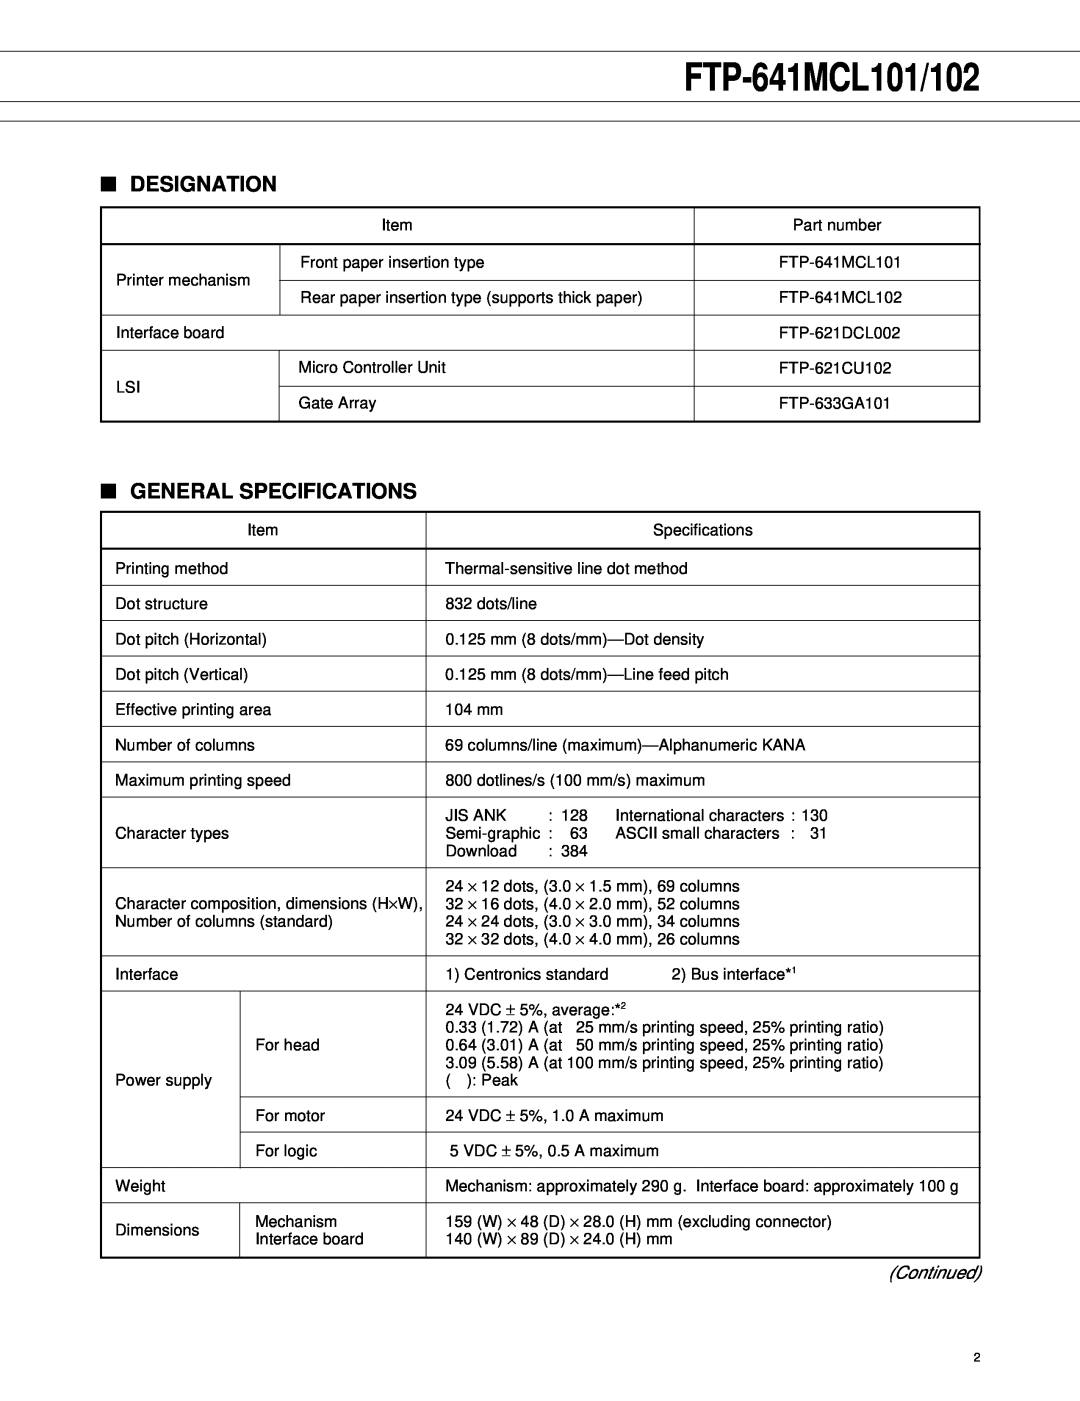 Fujitsu FTP-641MCL101/102 manual Designation, General Specifications, Continued 